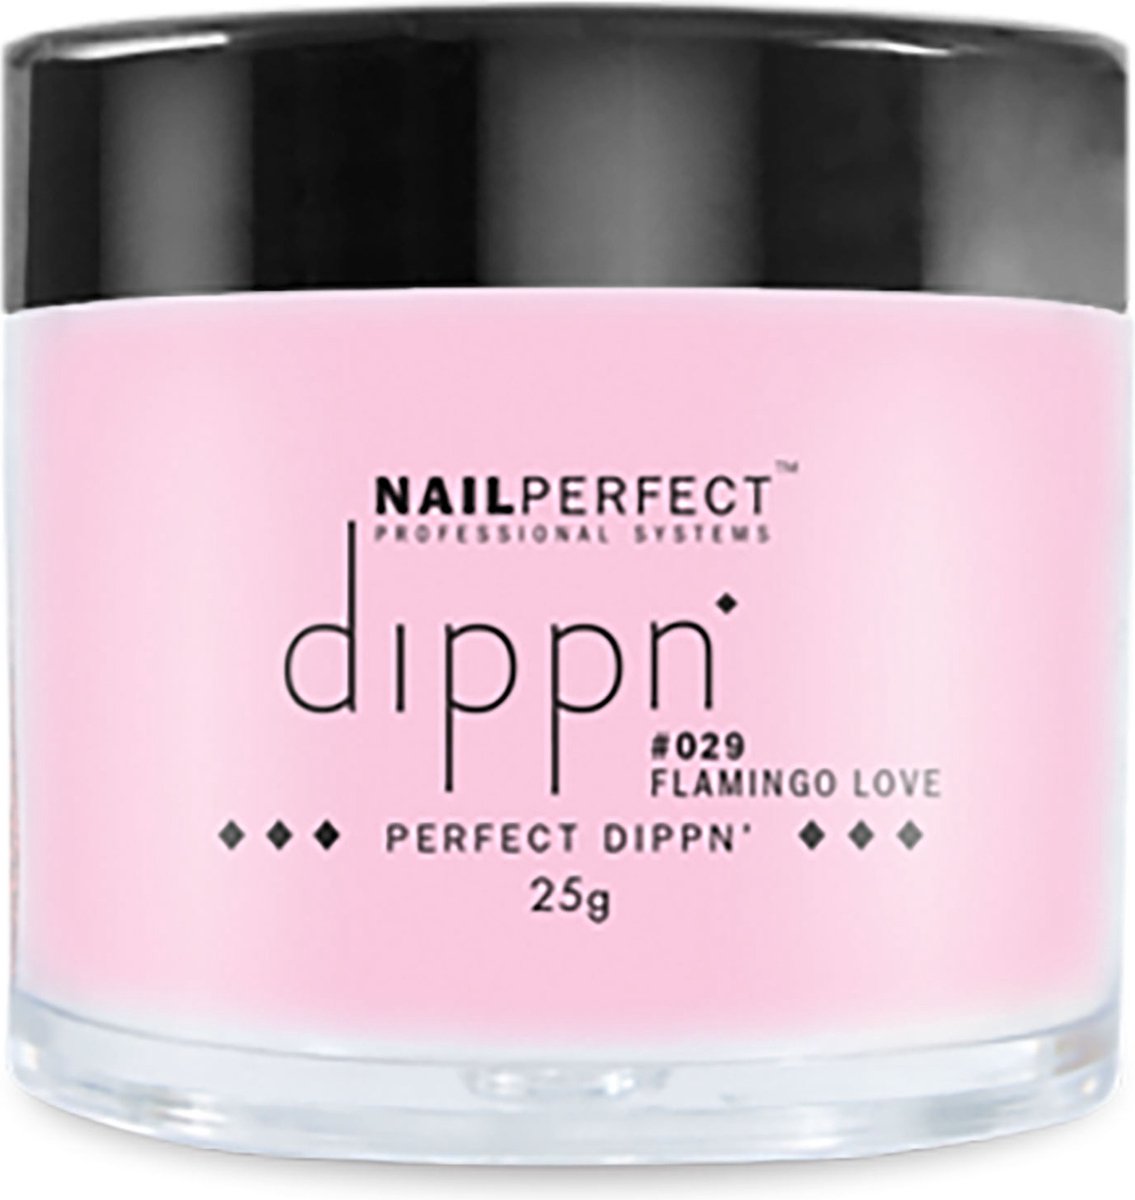 Nail Perfect - Dippn - #029 Flamingo Love - 25gr